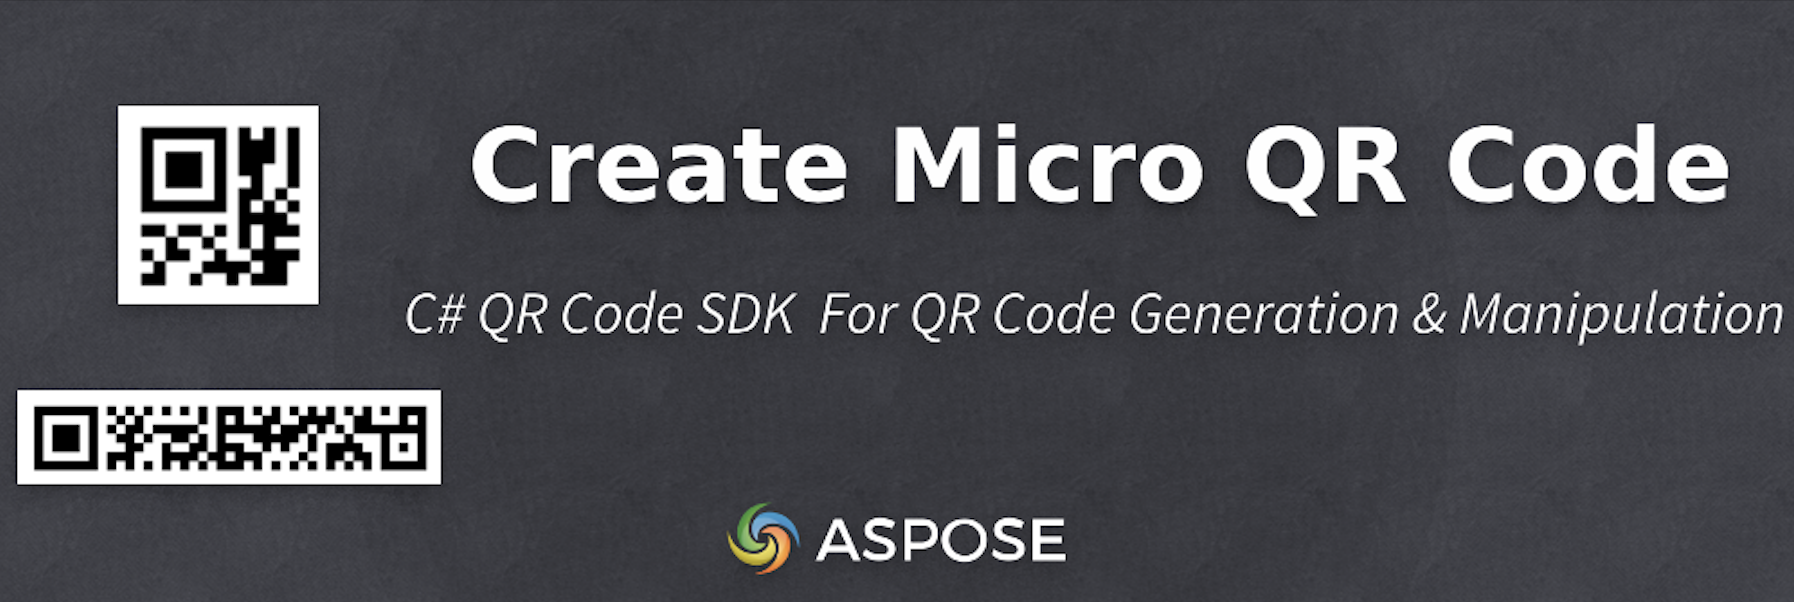 Create Micro QR Code in C# using QR Code SDK